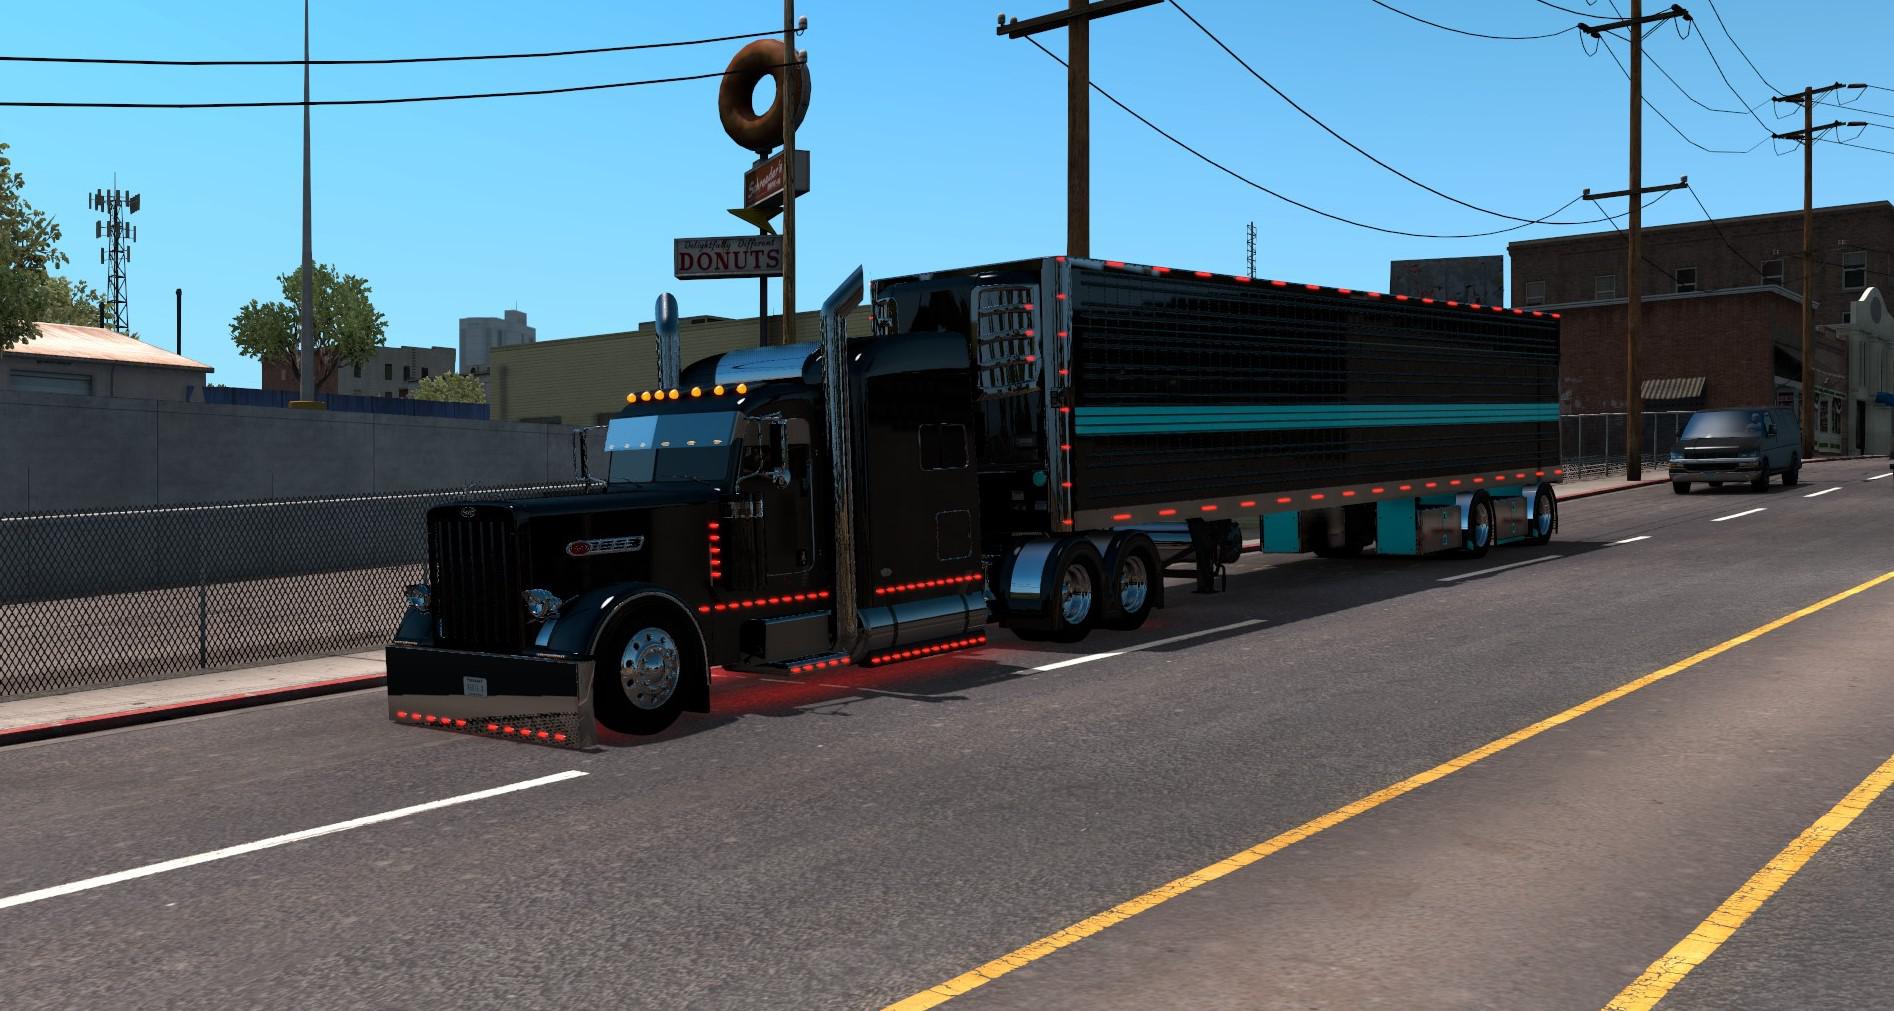 Ats Custom 53ft Trailer Ownable 139x American Truck Simulator Modsclub